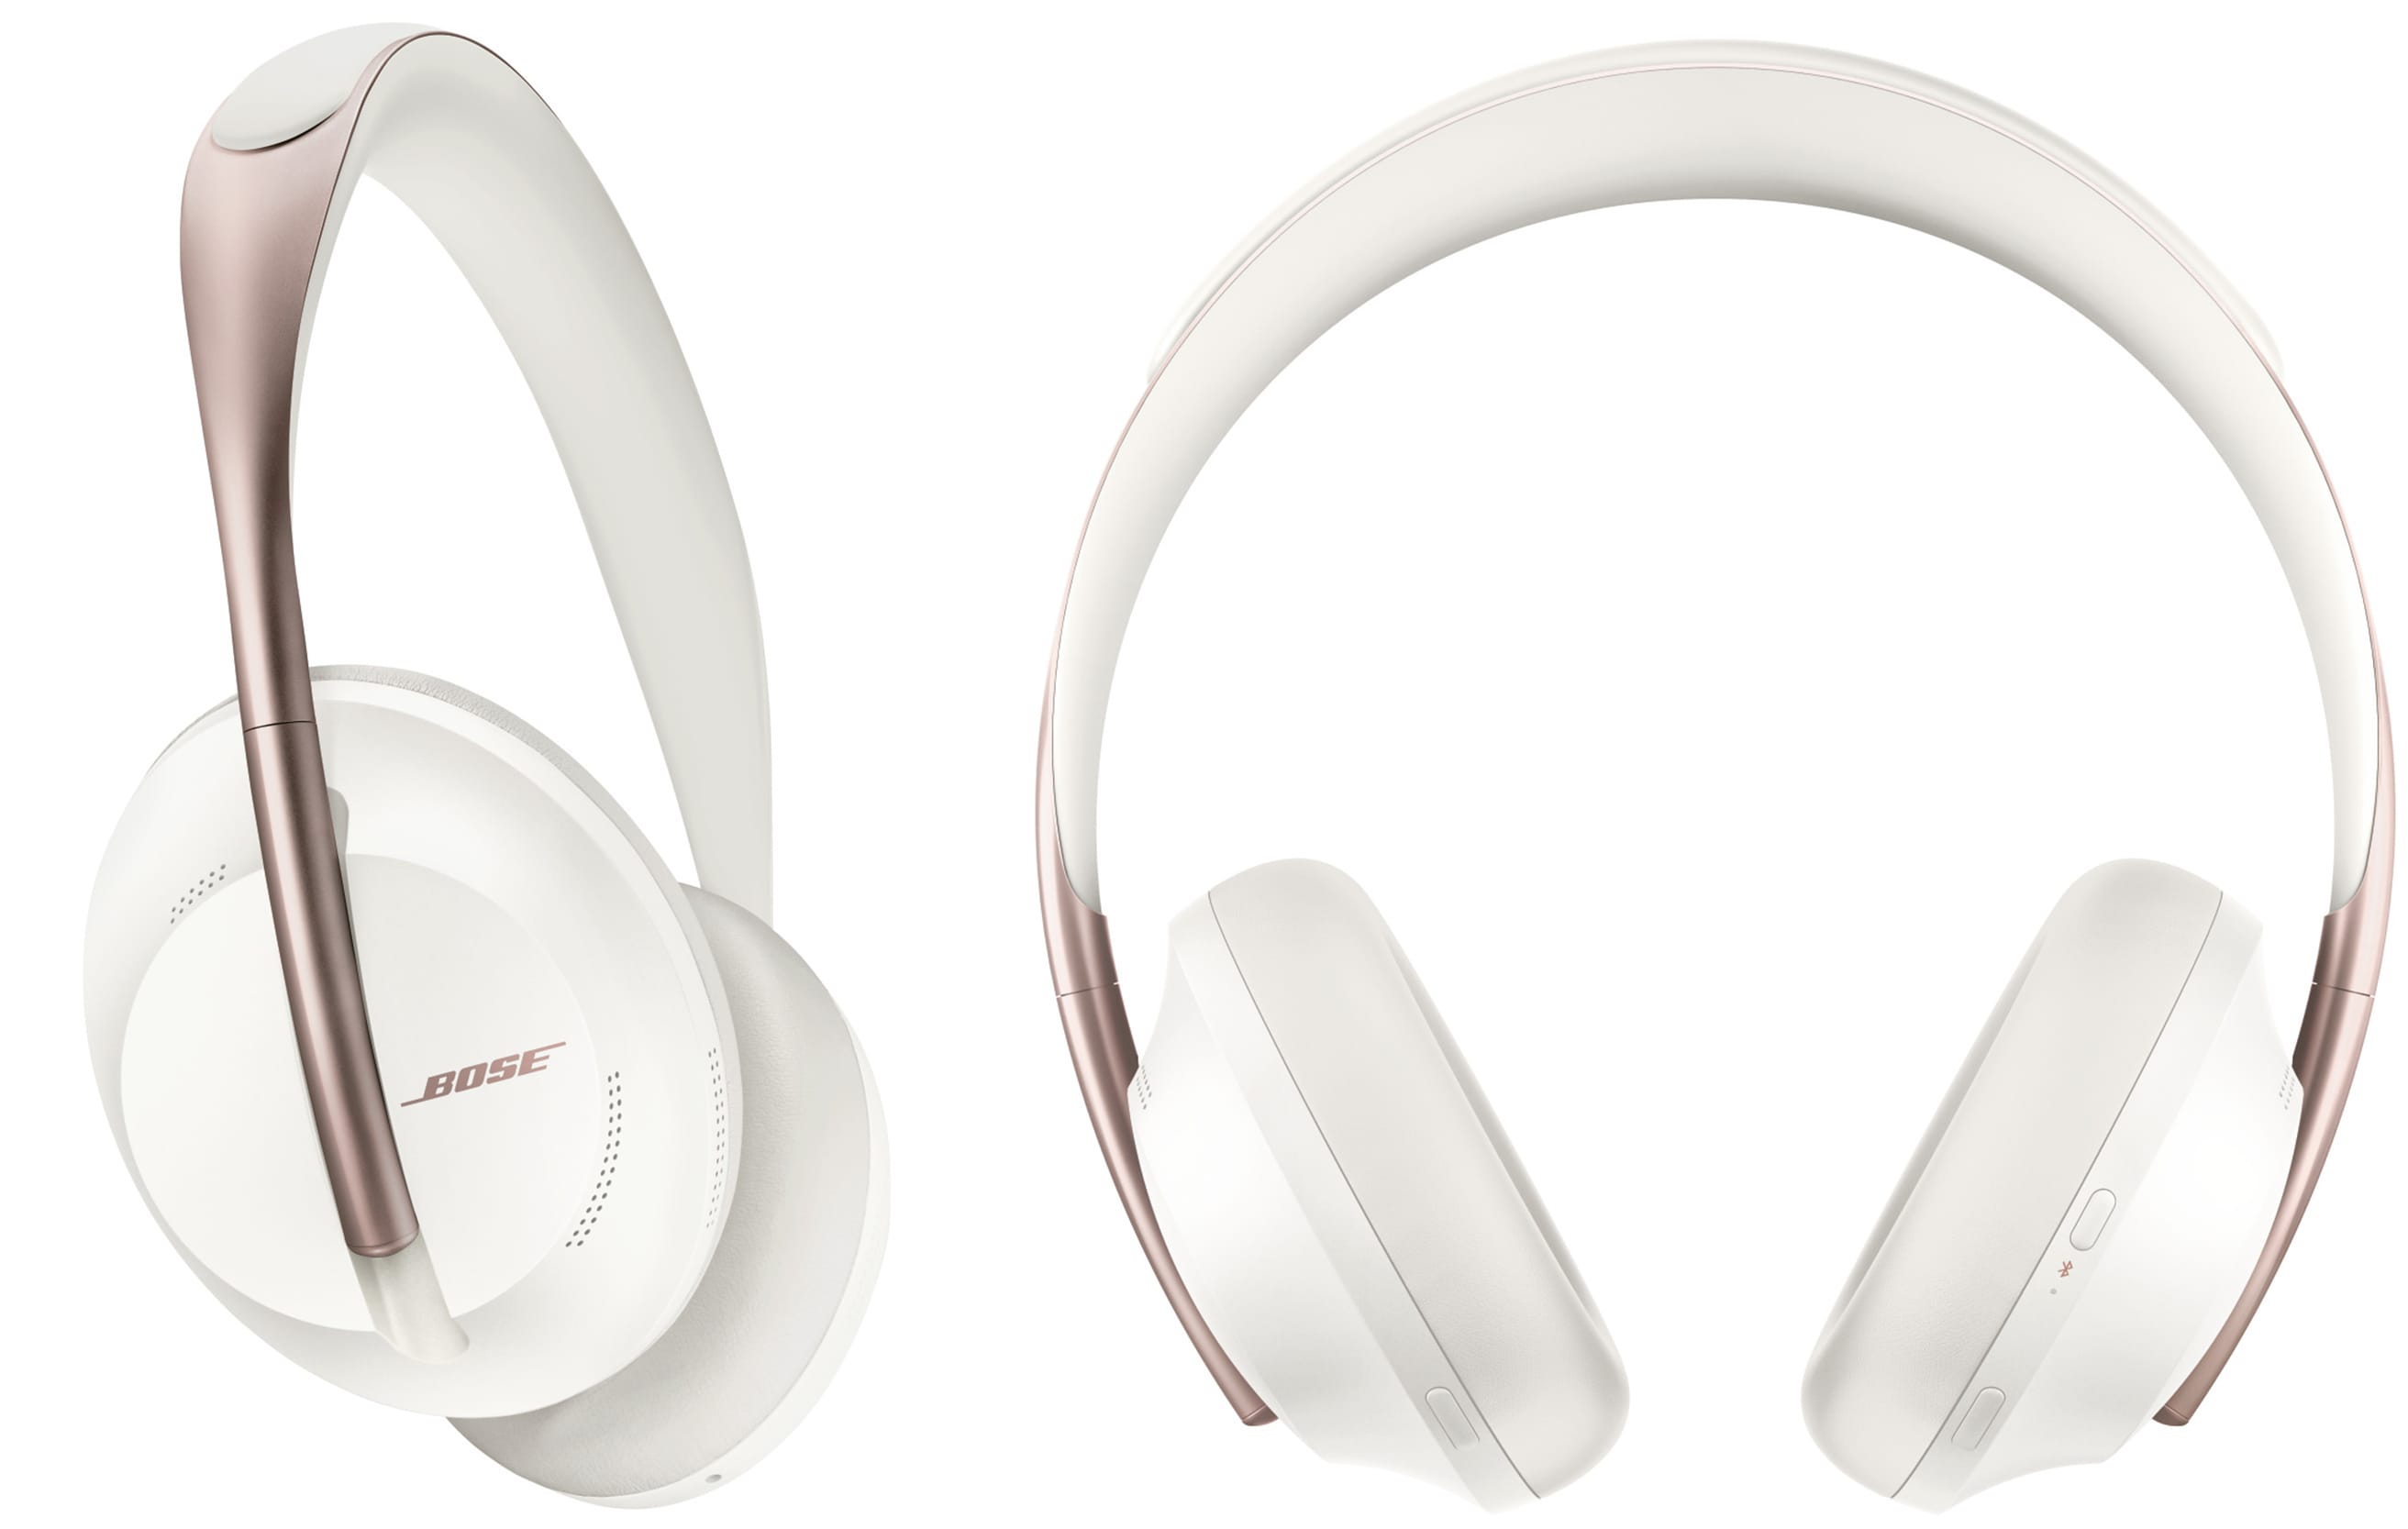 Bose Noise Cancelling Headphones 700 - Limited Edition (täljsten) -  Hörlurar - Elgiganten